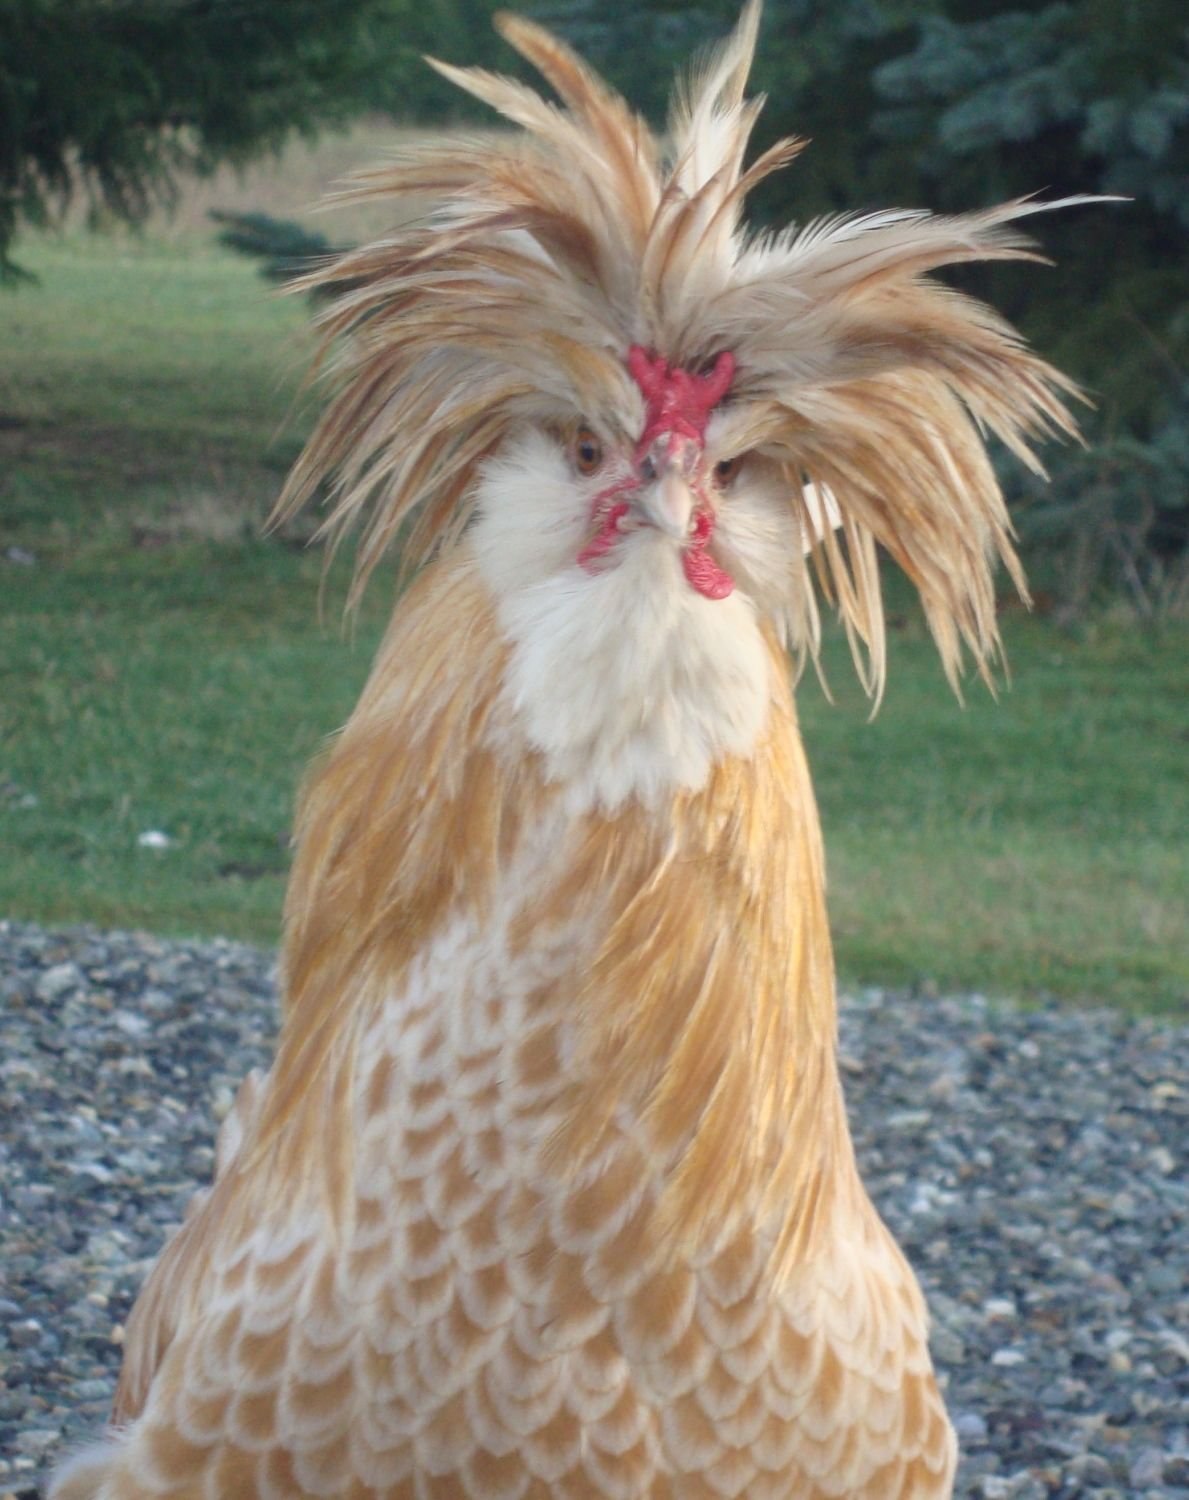 Курица с волосами - картинки и фото poknok.art